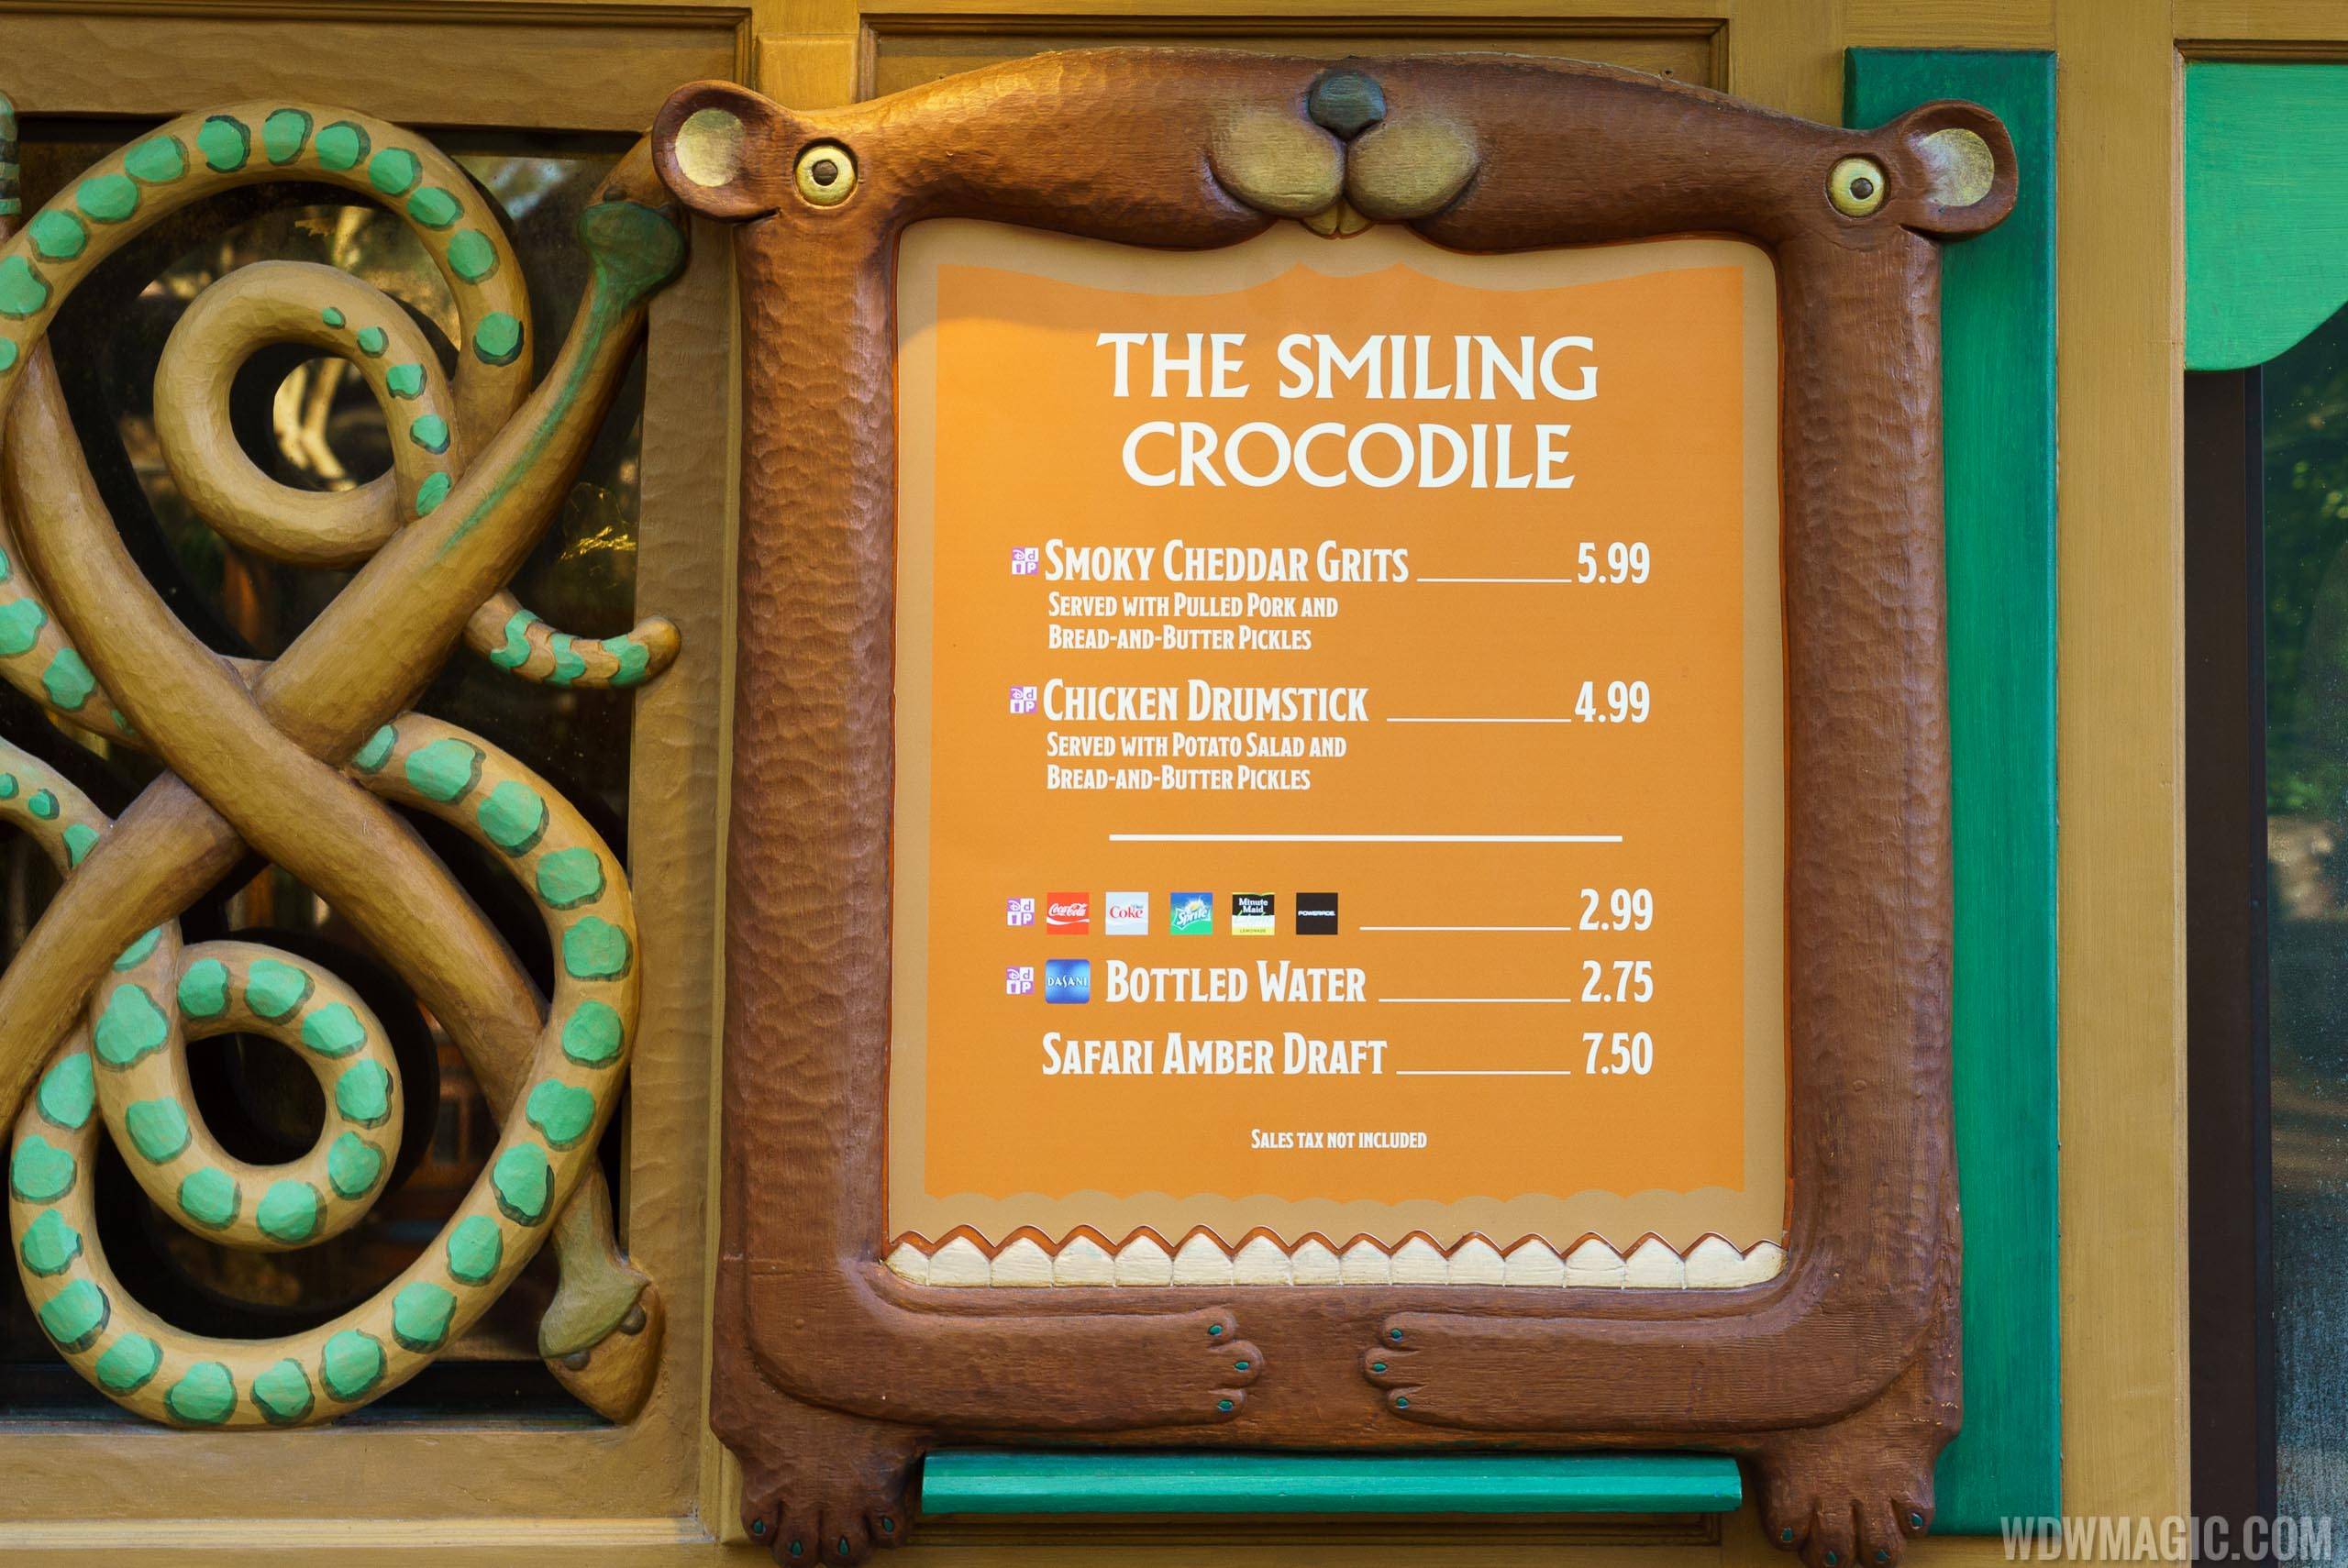 The Smiling Crocodile